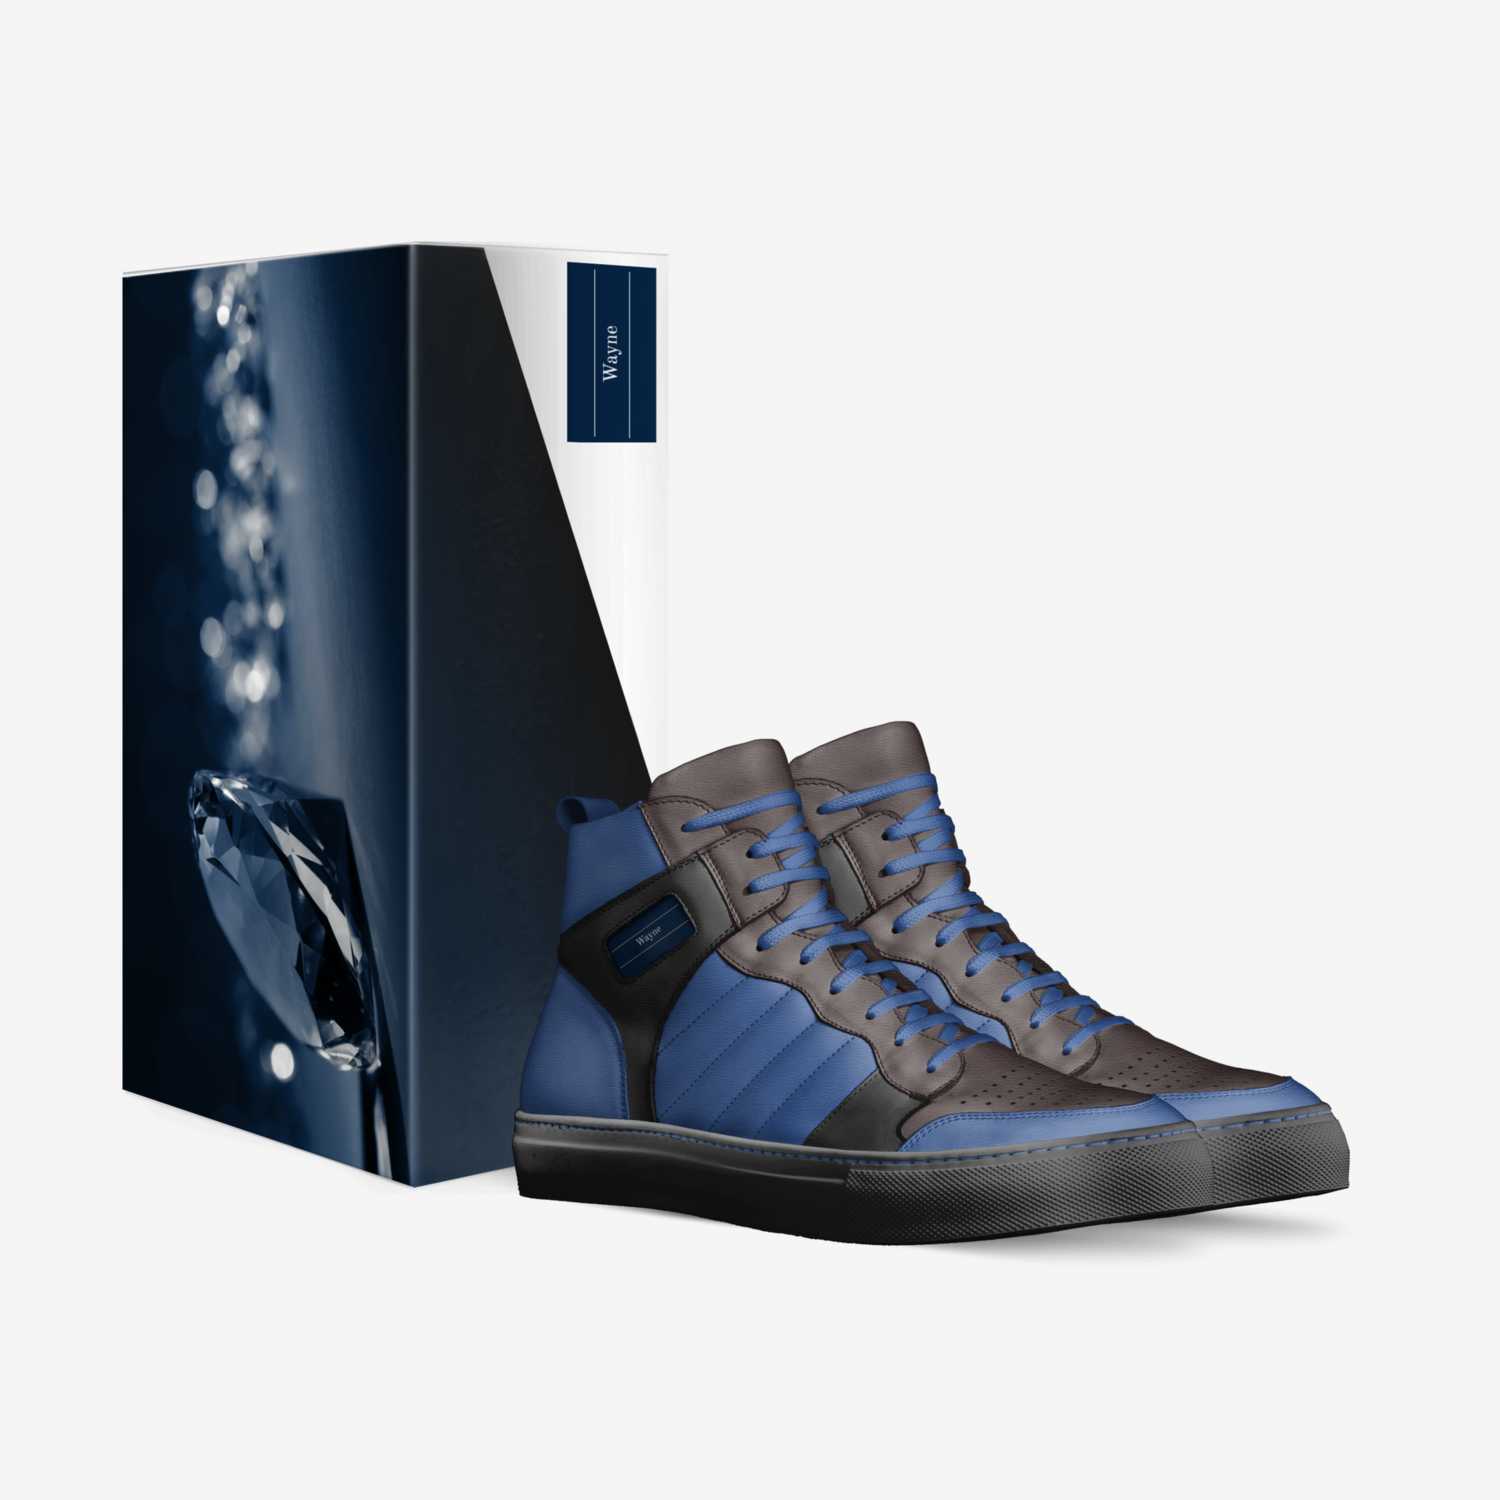 Wayne custom made in Italy shoes by Ayrehaud Jones | Box view